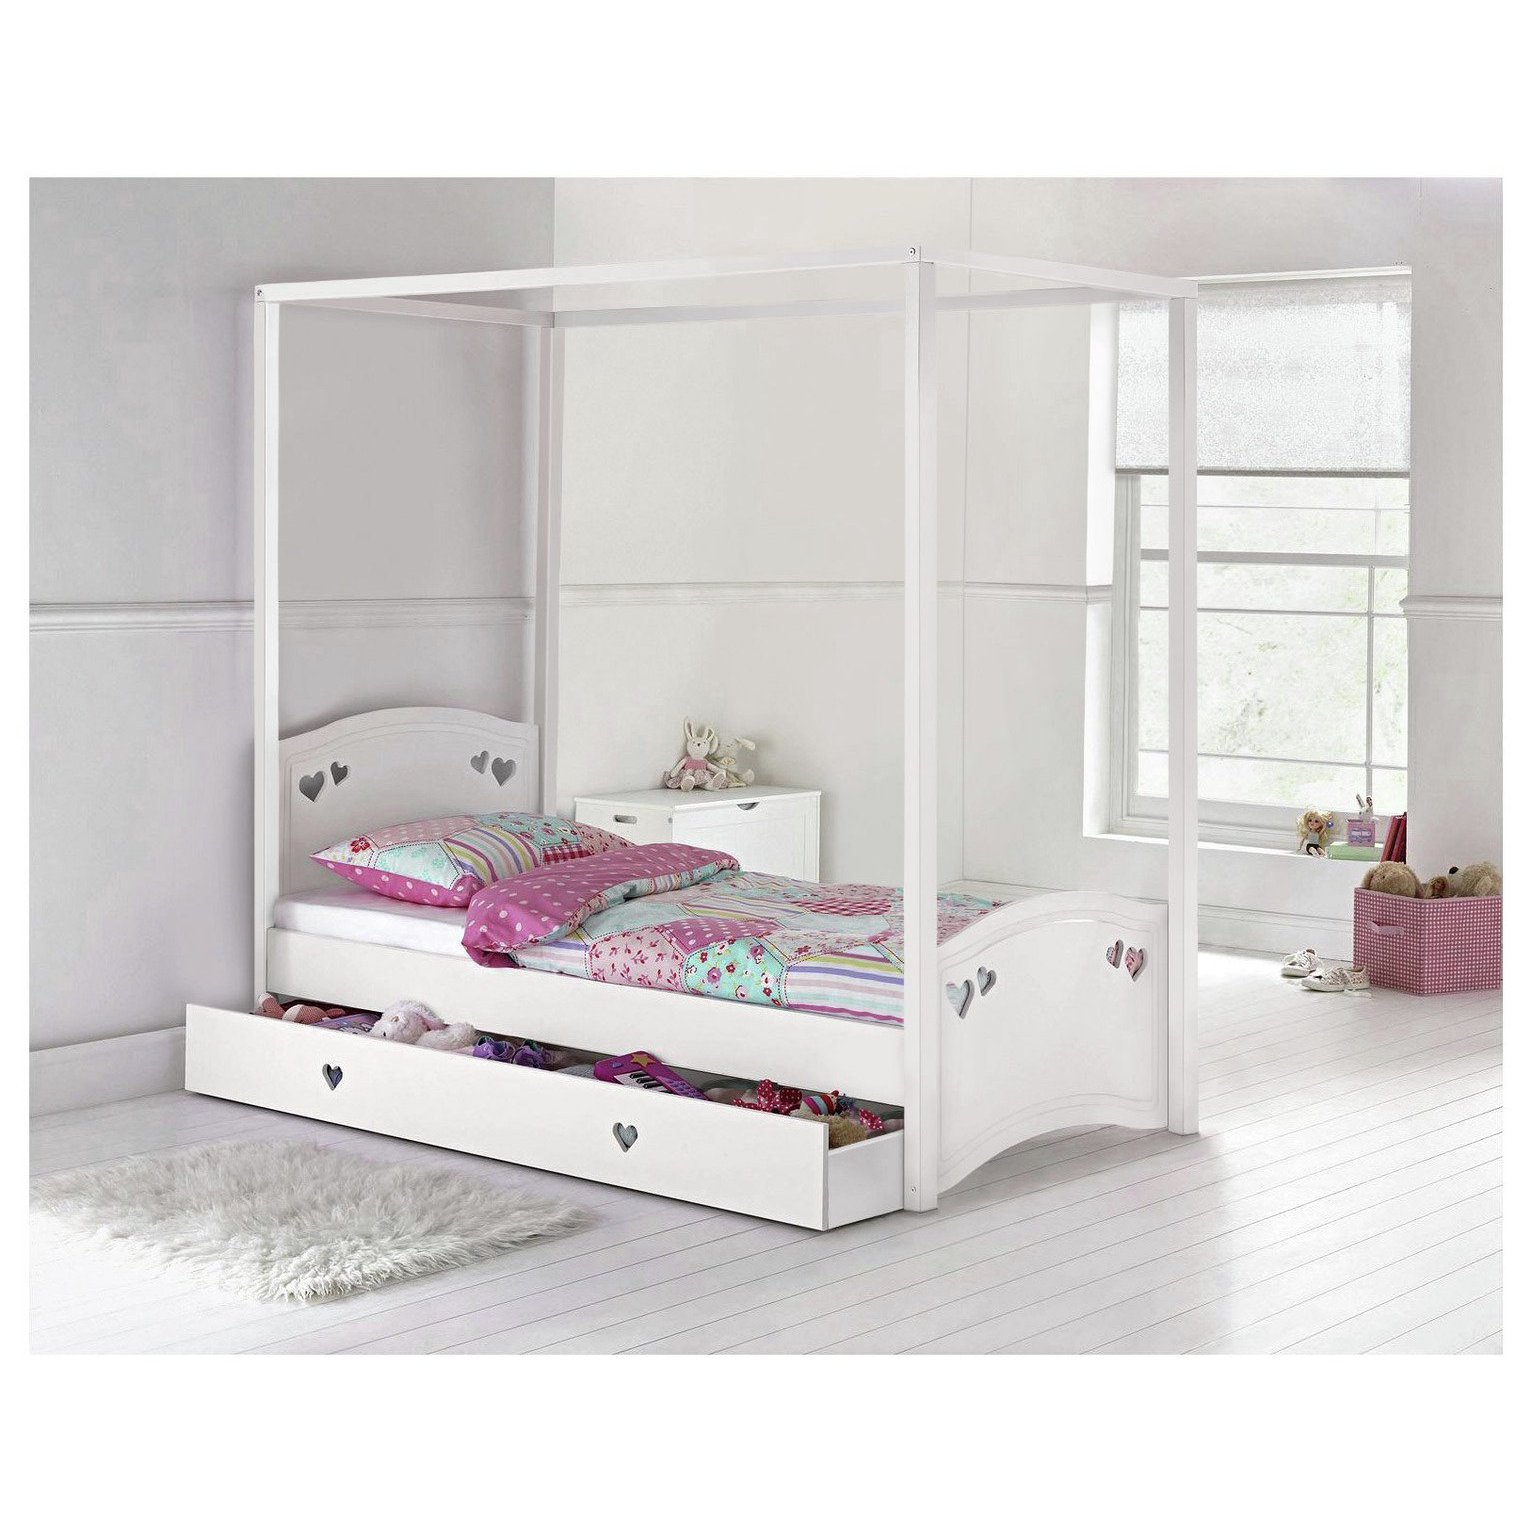 Argos Home Mia Single 4 Poster Bed and Kids Mattress - White